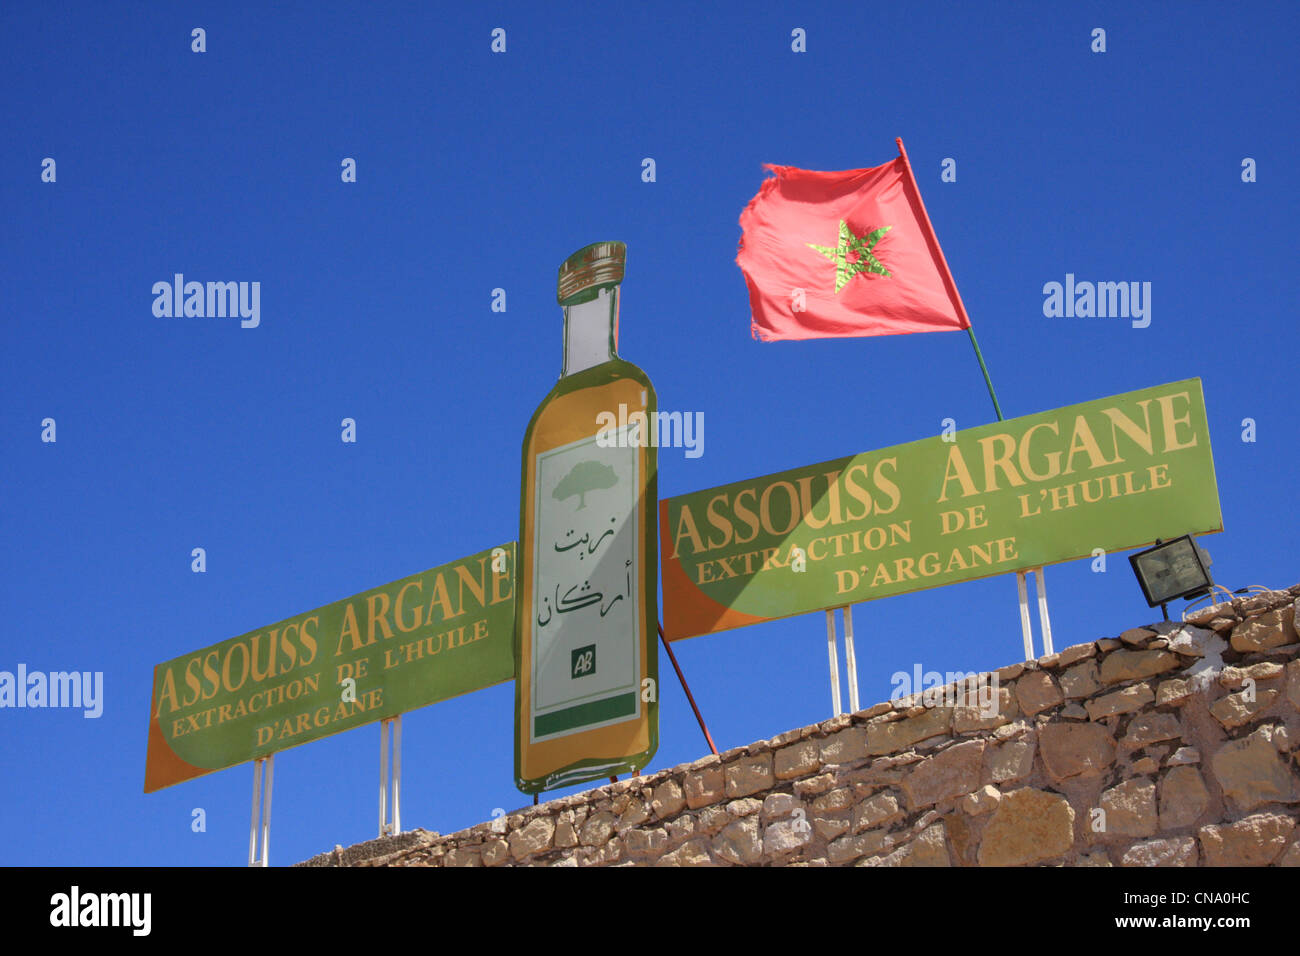 Los carteles encima de la entrada del Assouss Argane aceite de argán cooperativa cerca de Essaouira, el Valle del Souss, en el sur de Marruecos, África occidental Foto de stock